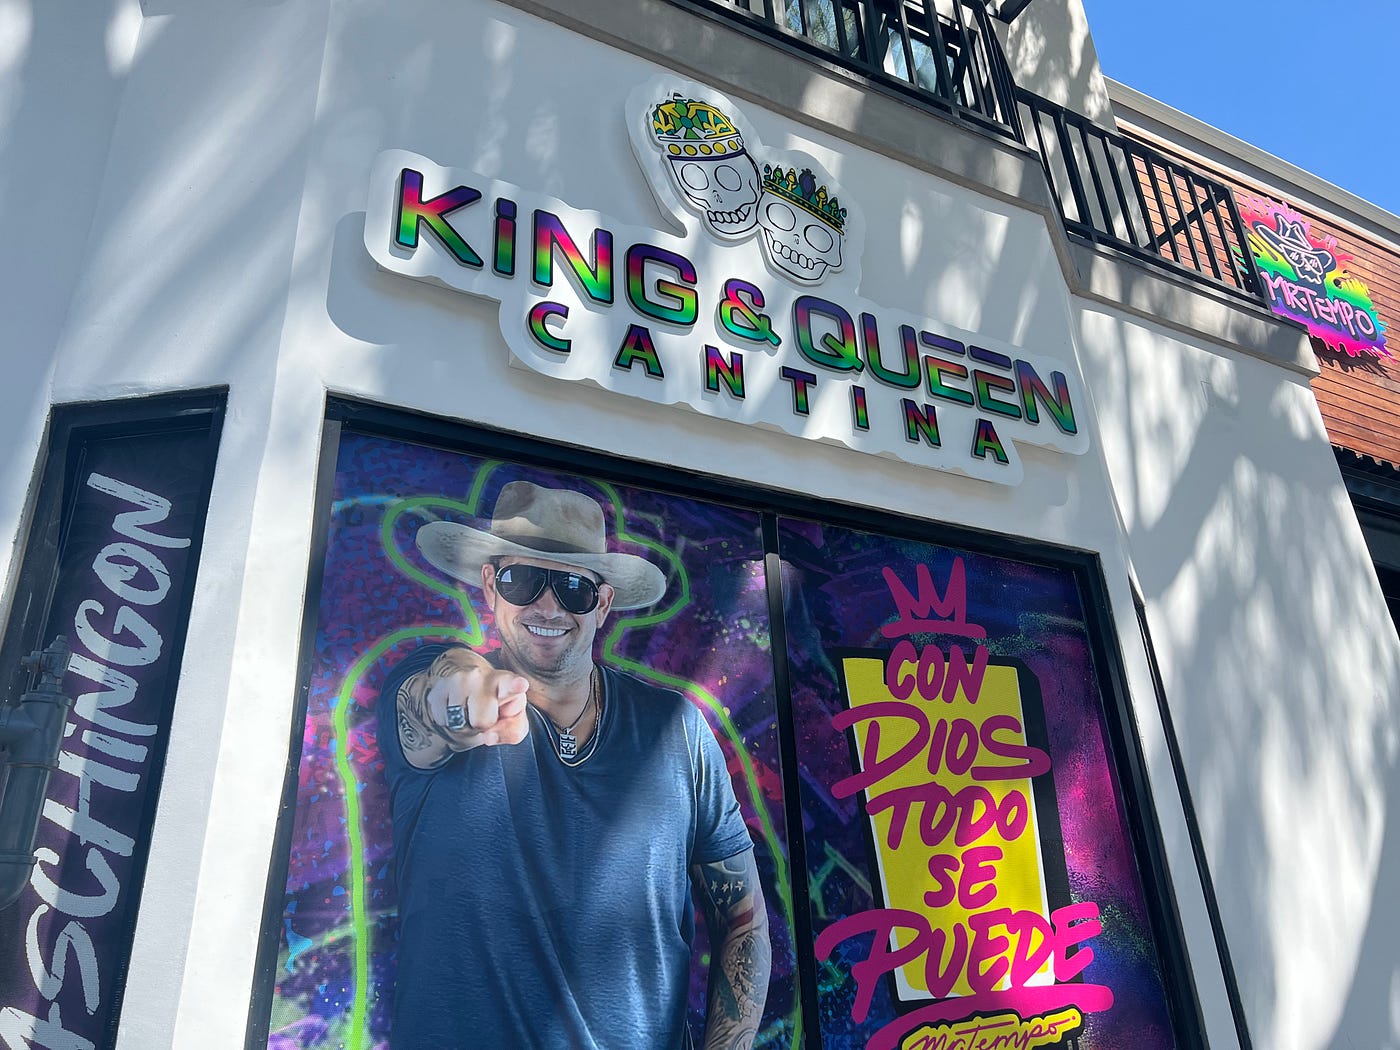 King & Queen Cantina - San Diego Restaurant - San Diego, CA